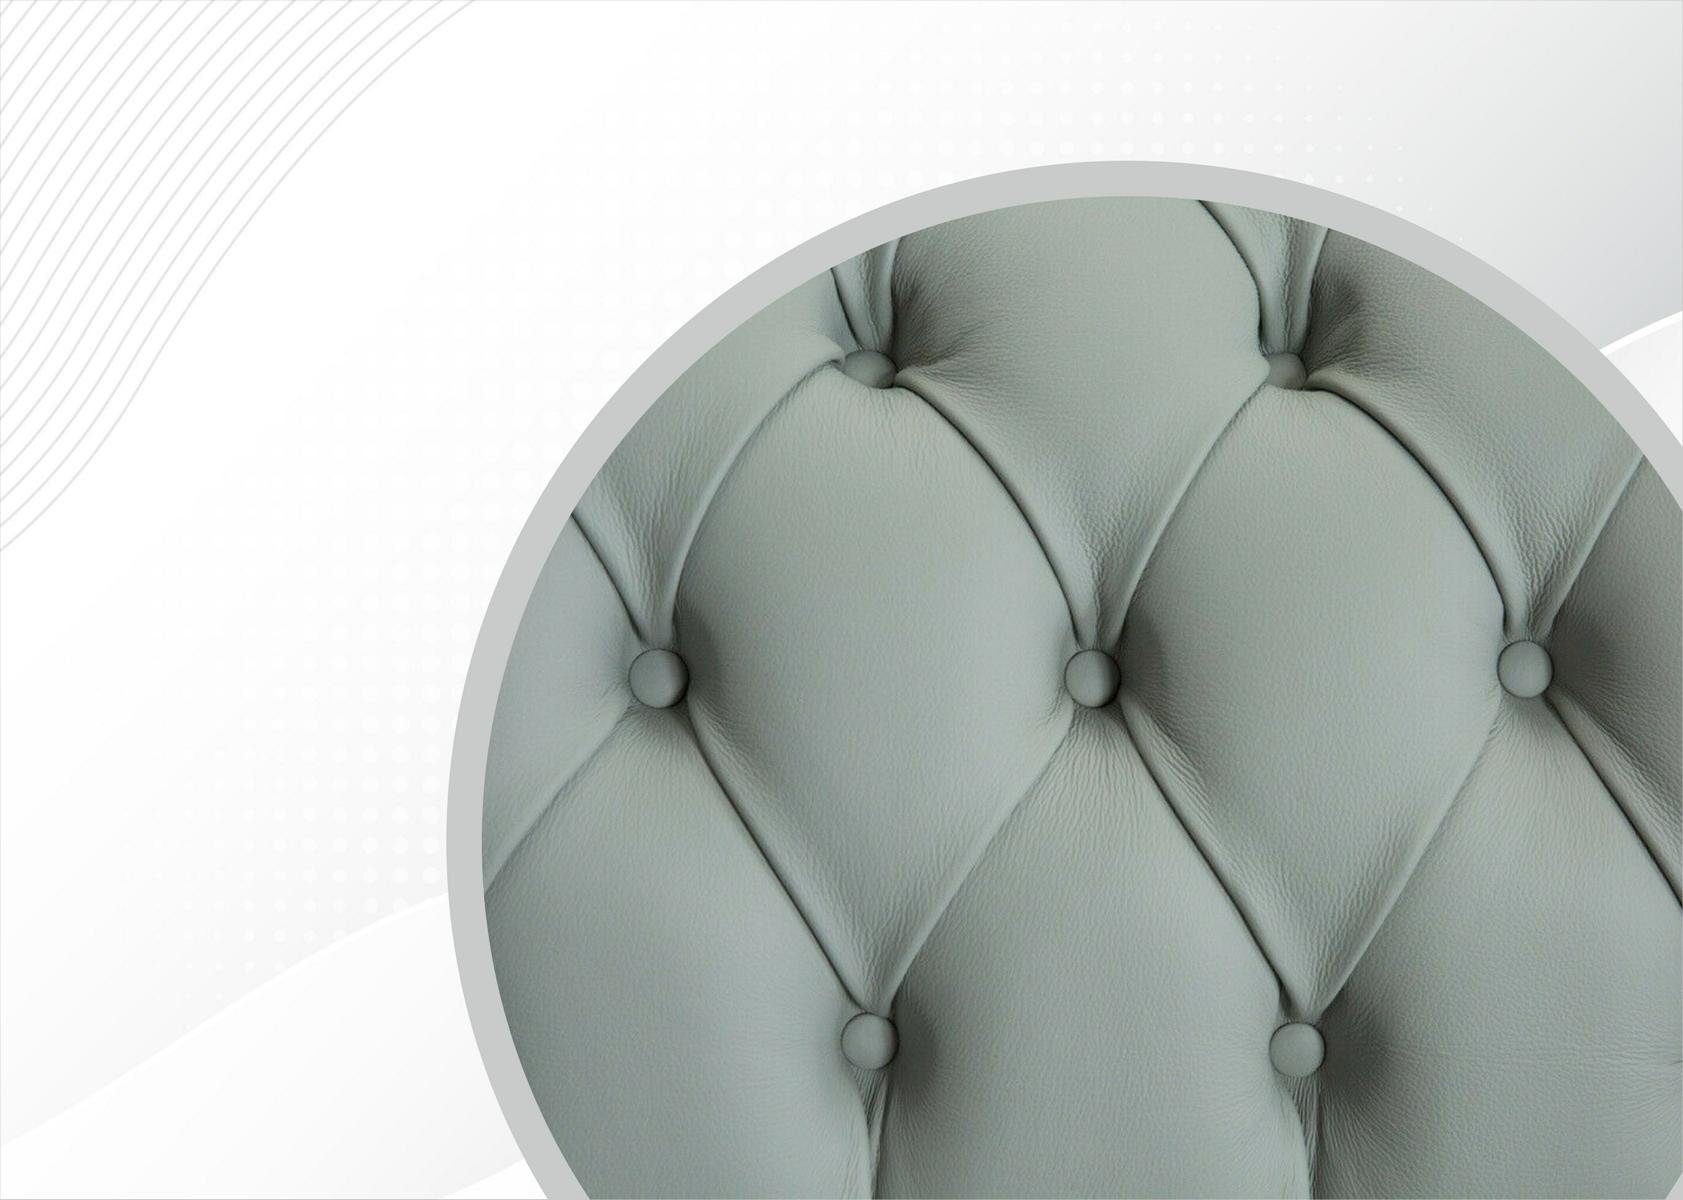 Sofa JVmoebel Sitzer 225 Couch 3 Chesterfield Design Chesterfield-Sofa, cm